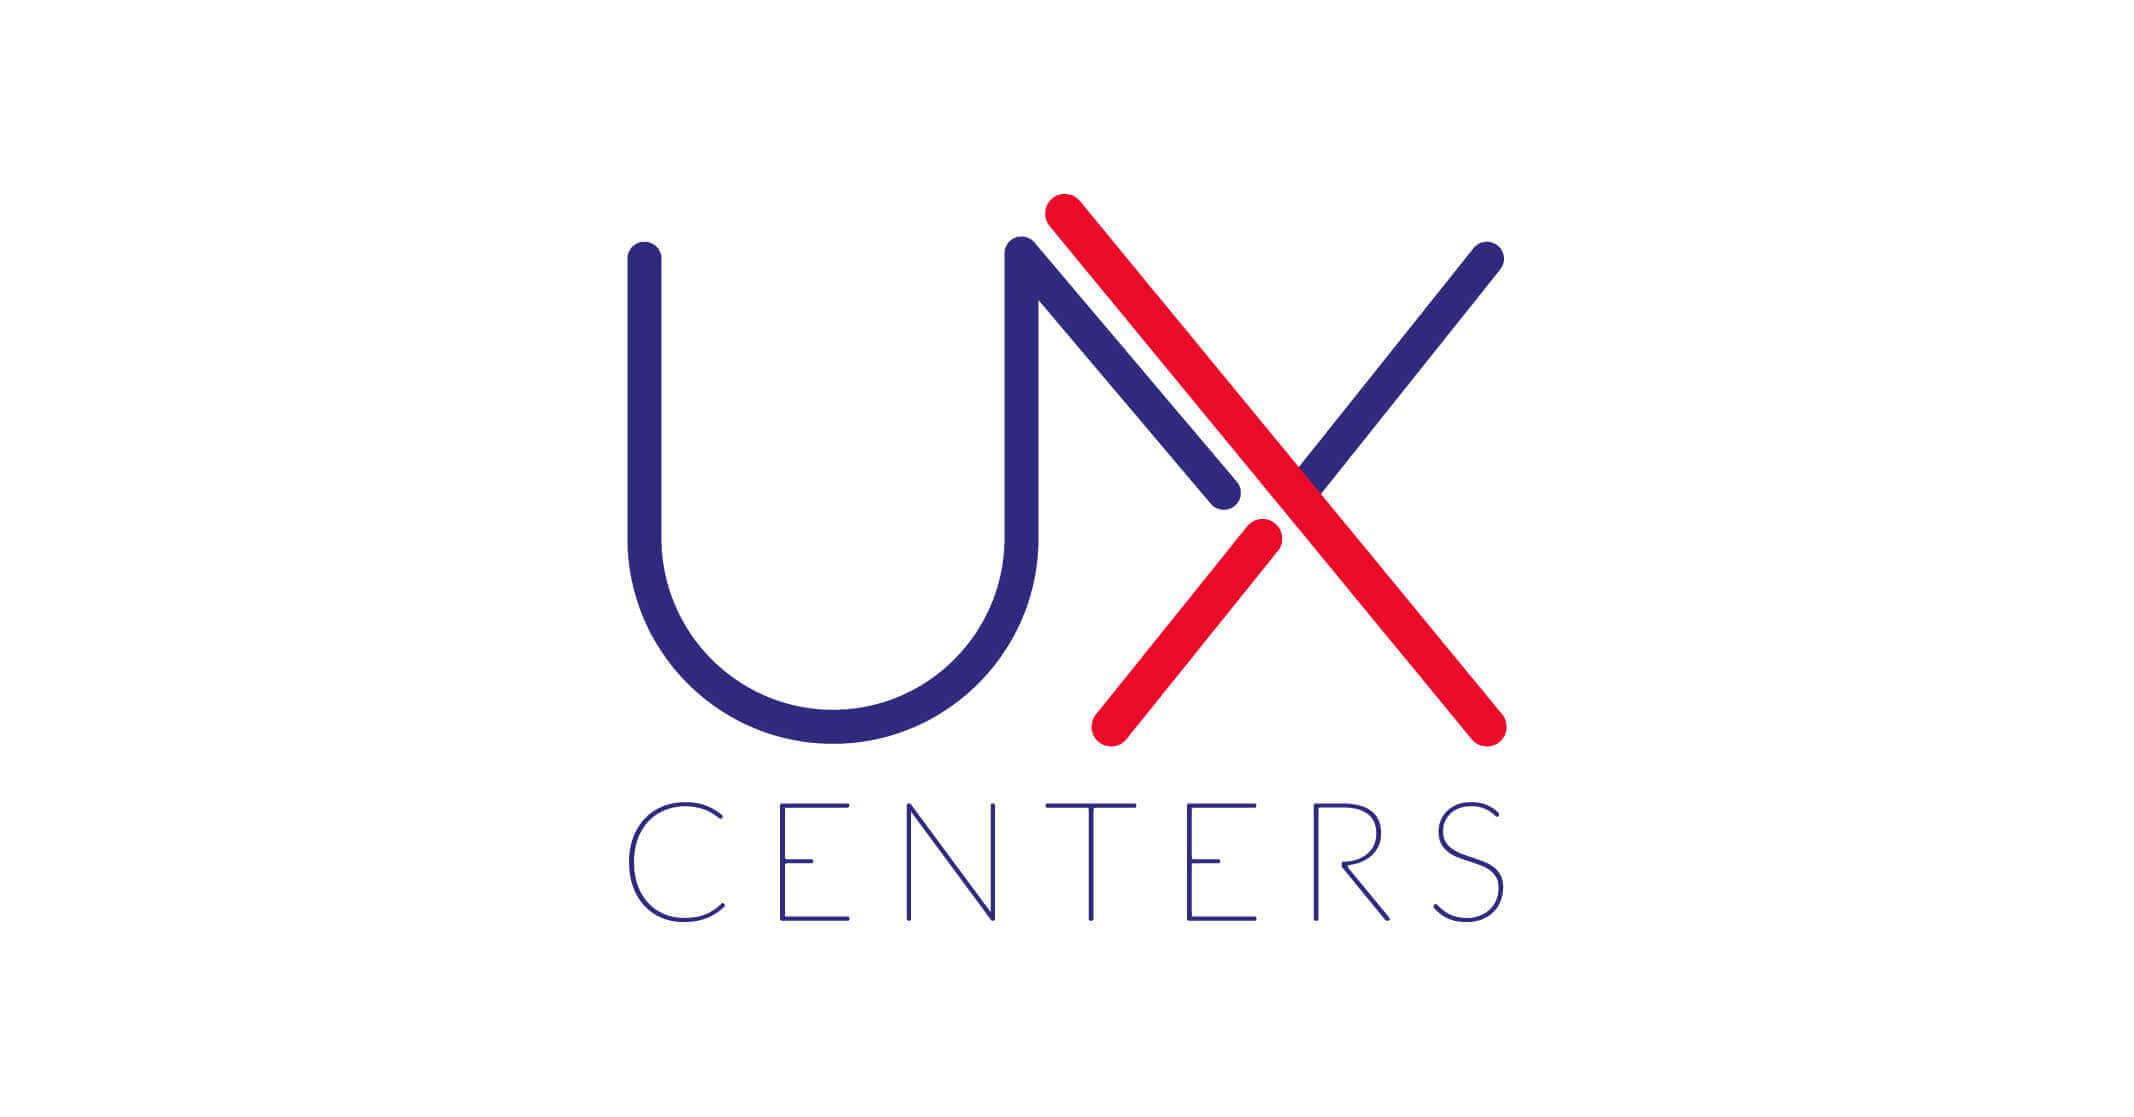 UX Centersبالإسكندرية طالبين Customer Service Representative